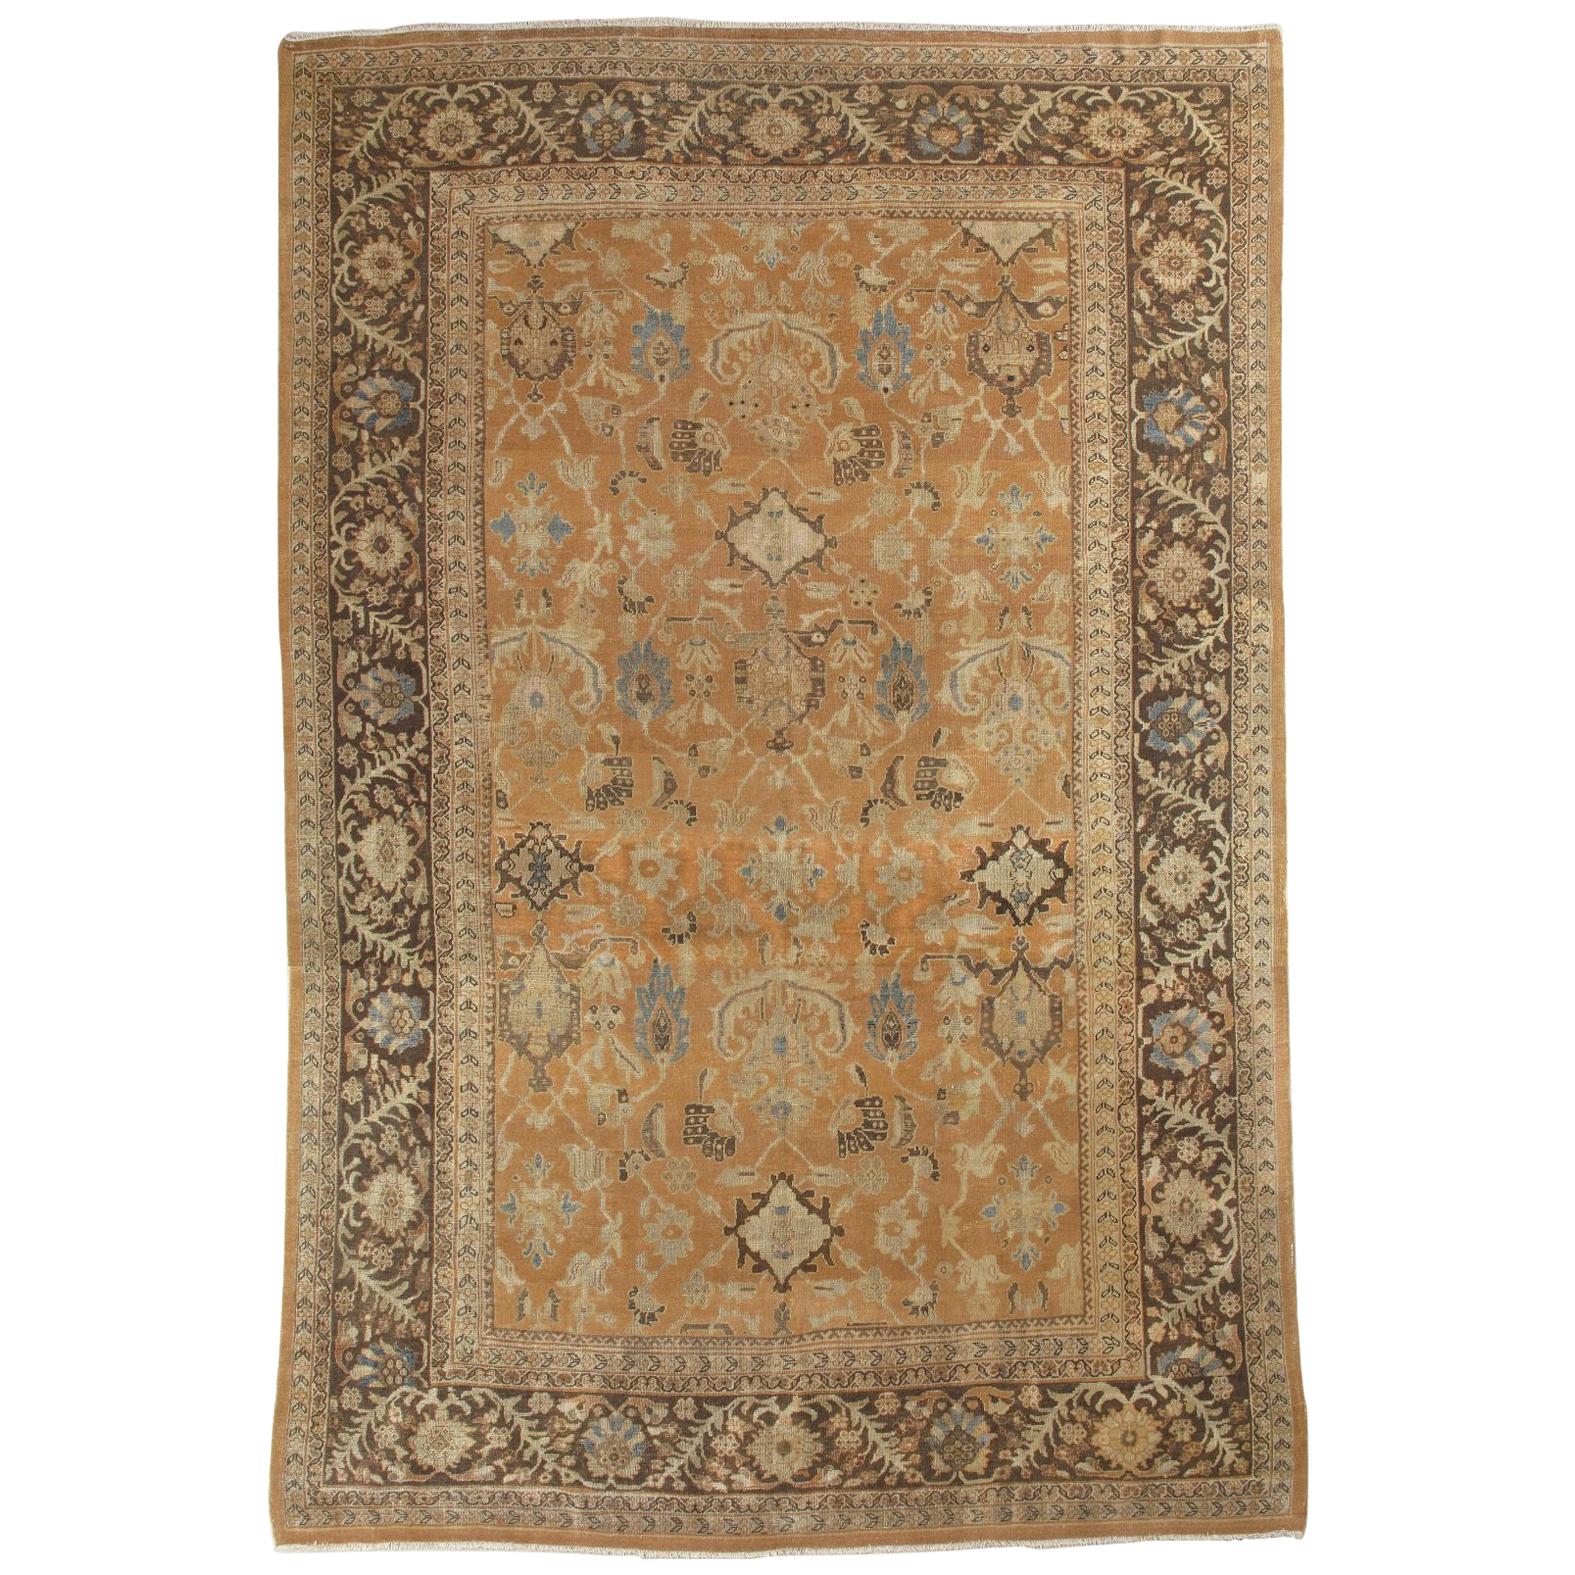 Antique Persian Sultanabad Carpet, Handmade Oriental Rug, Brown, Peach Soft Blue